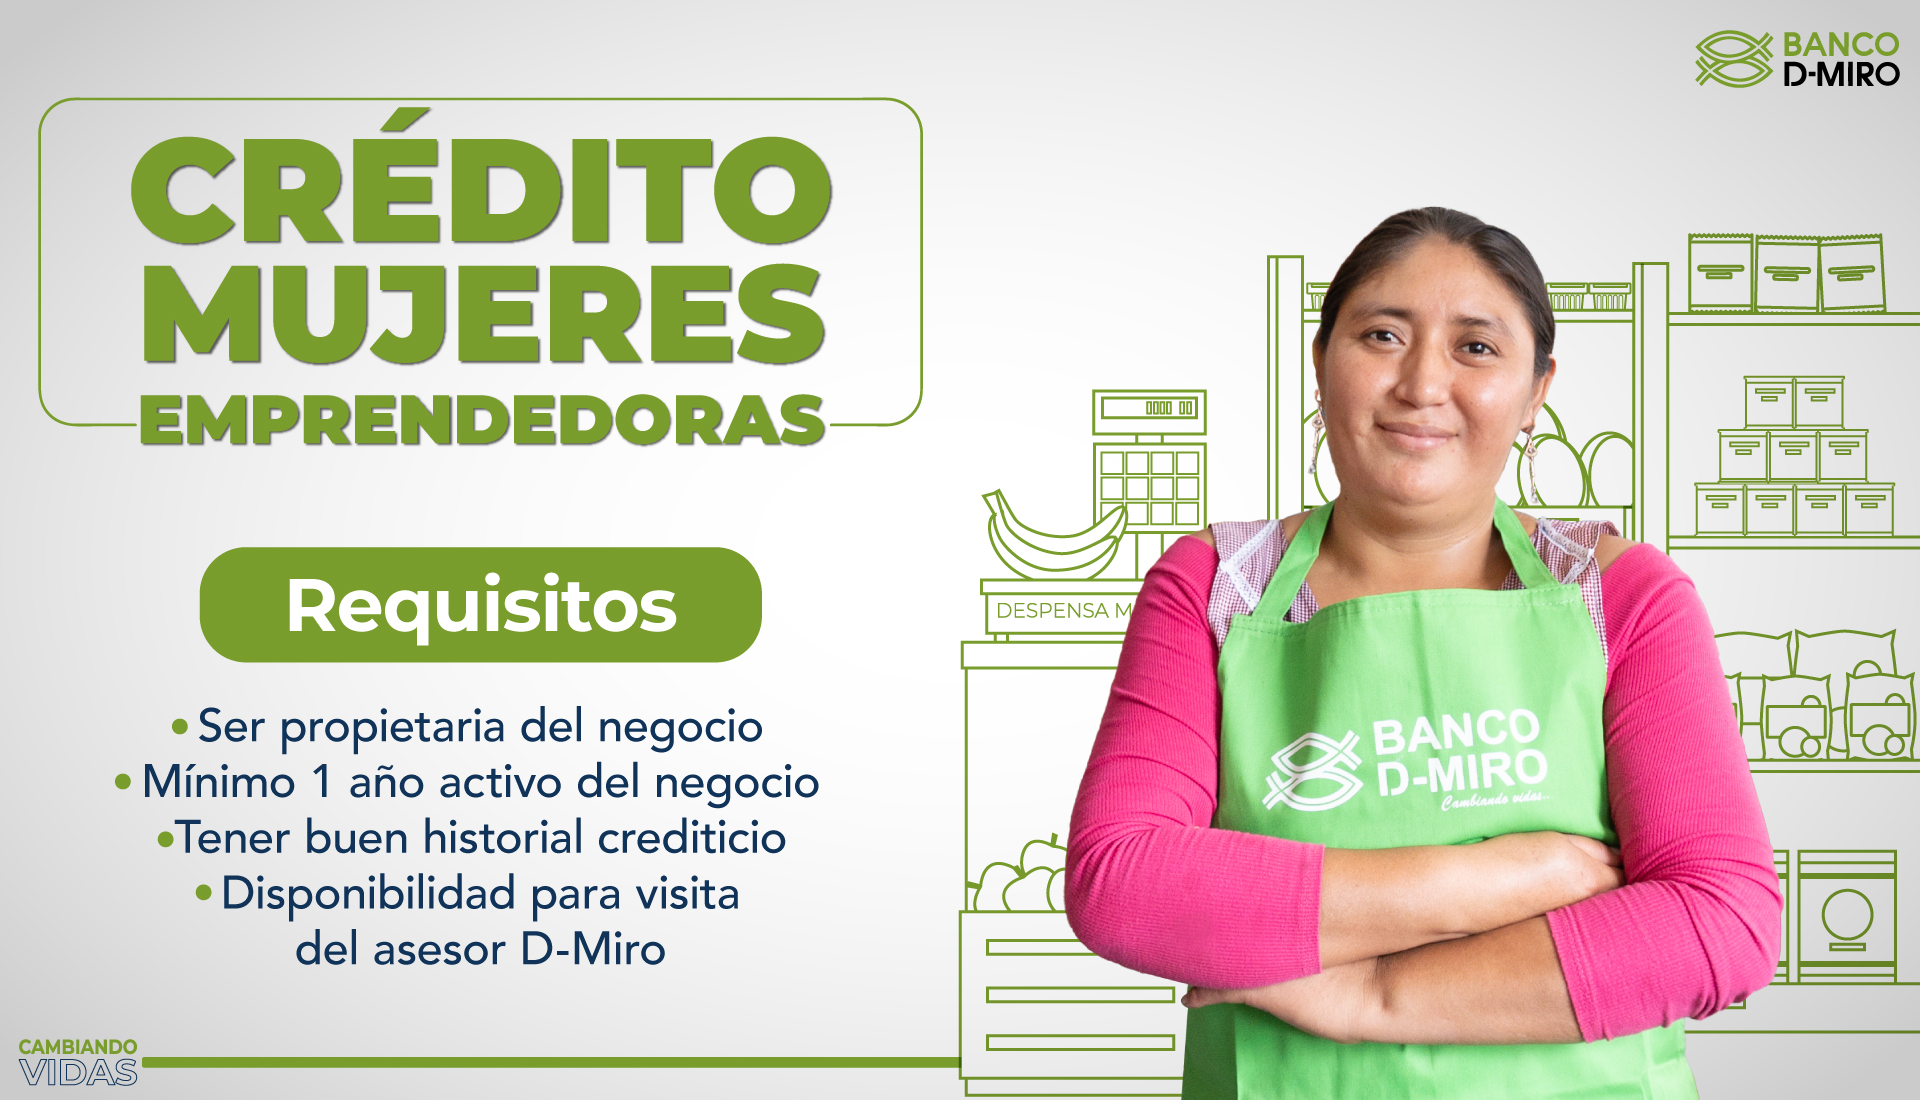 Banco D-MIRO credito-mujer-emprendedora 3